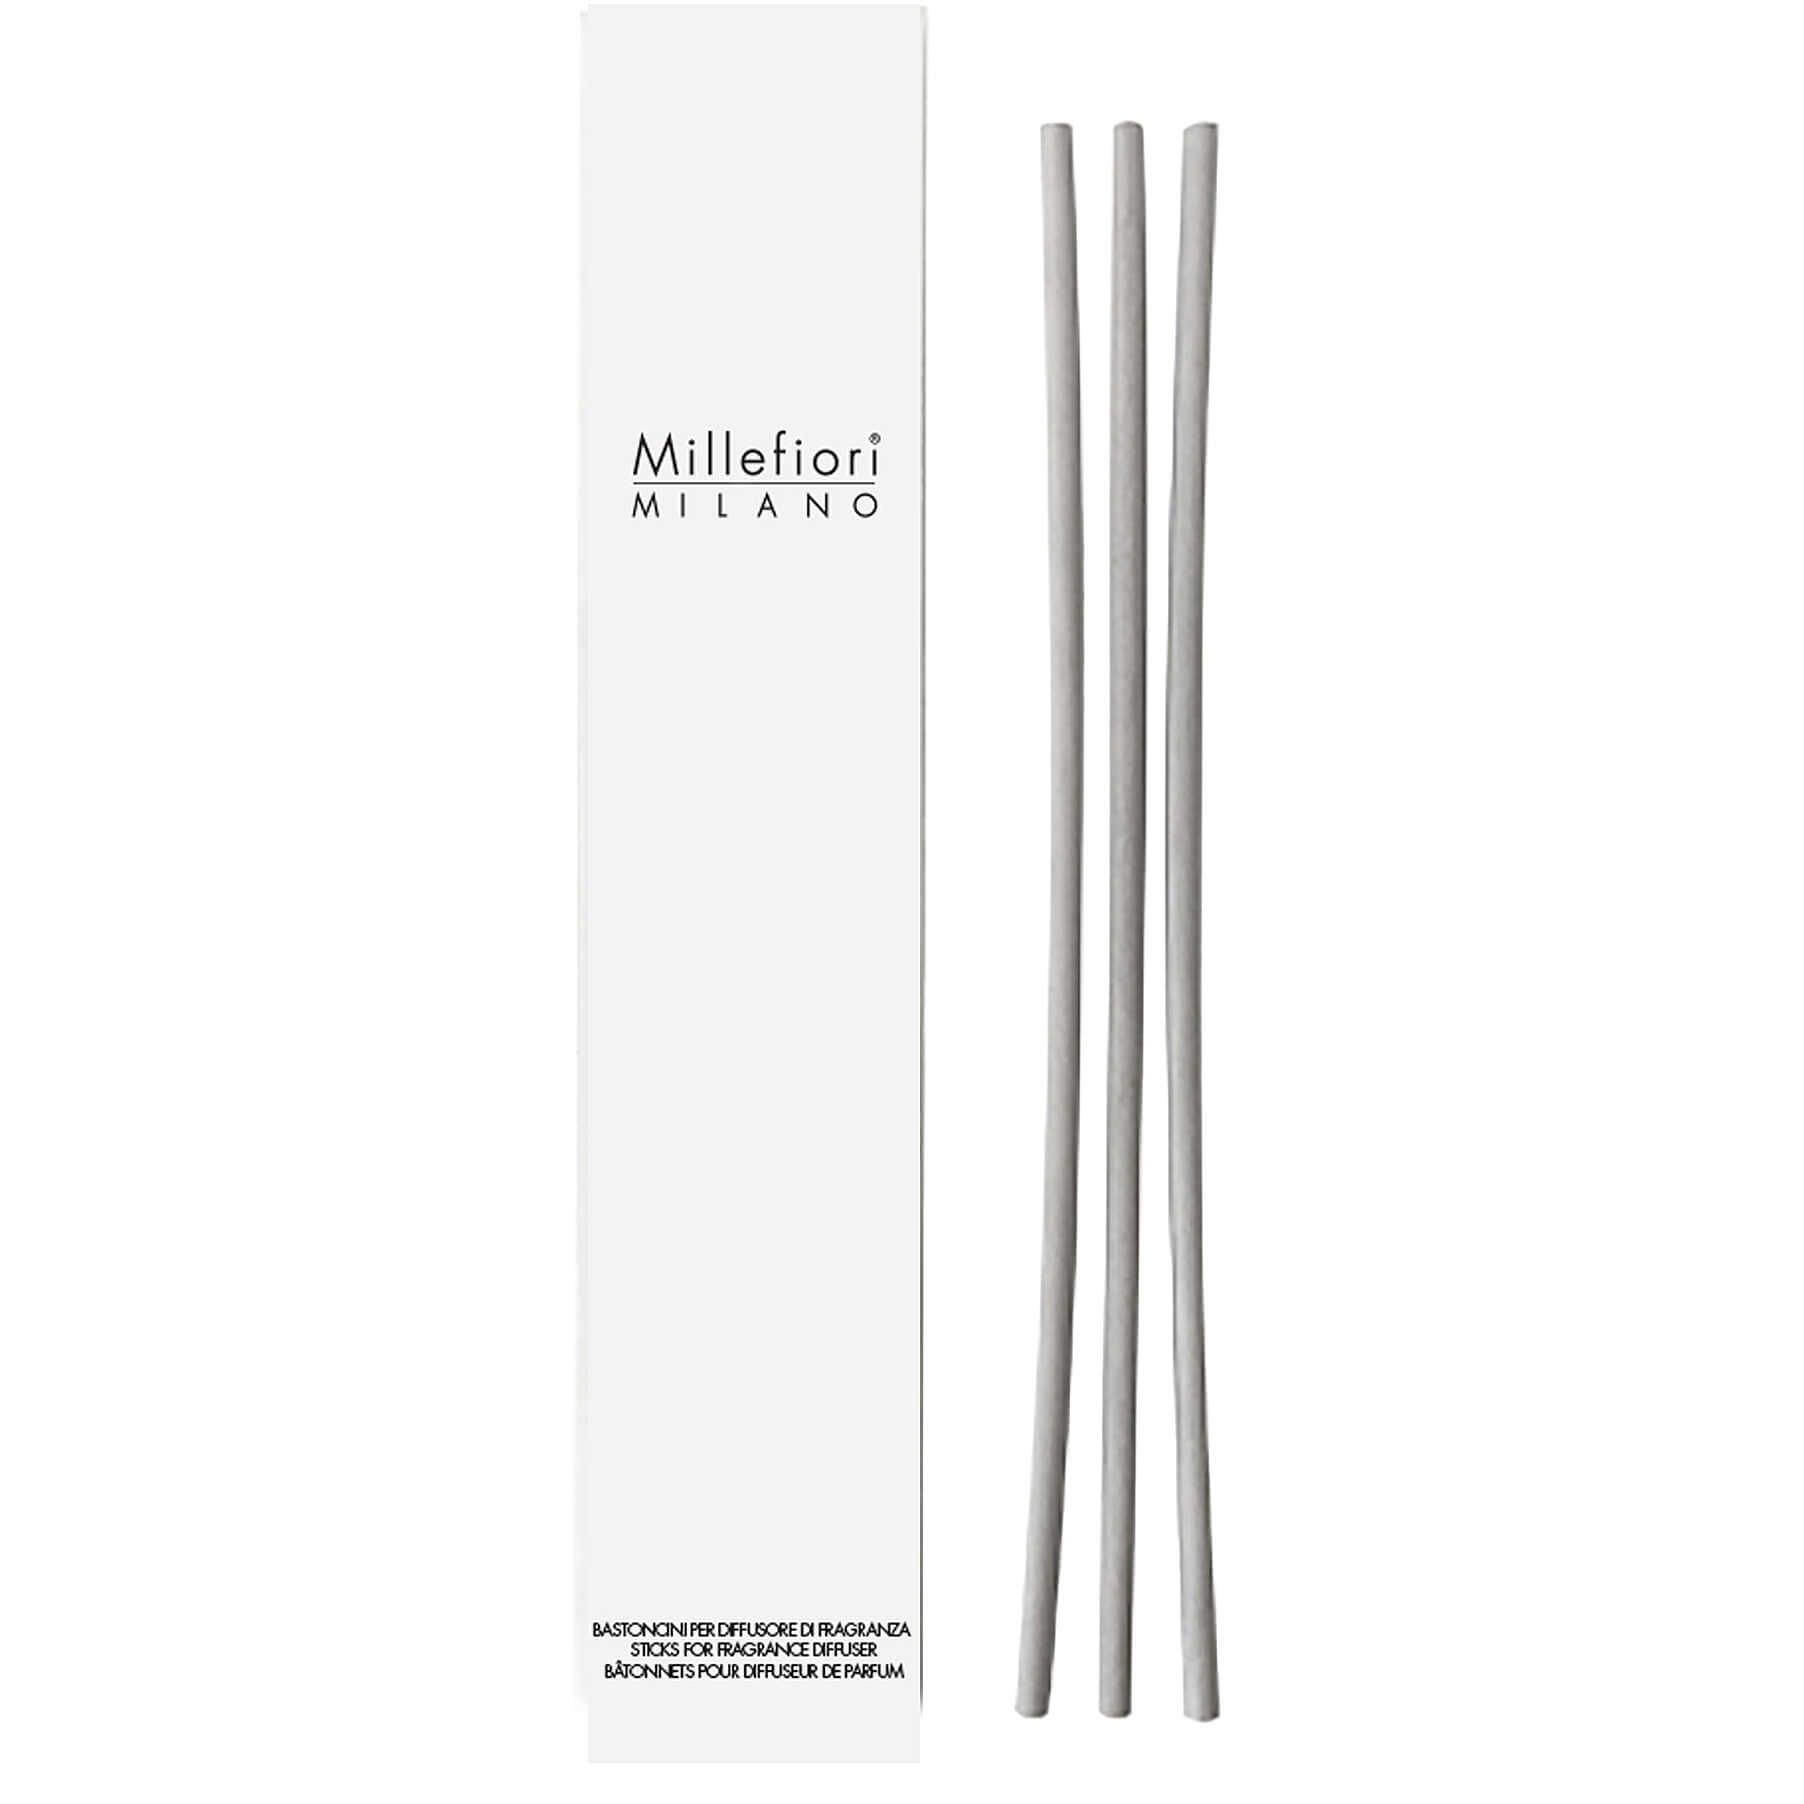 Millefiori Milano Náhradní stébla pro difuzér Air Design 3 ks